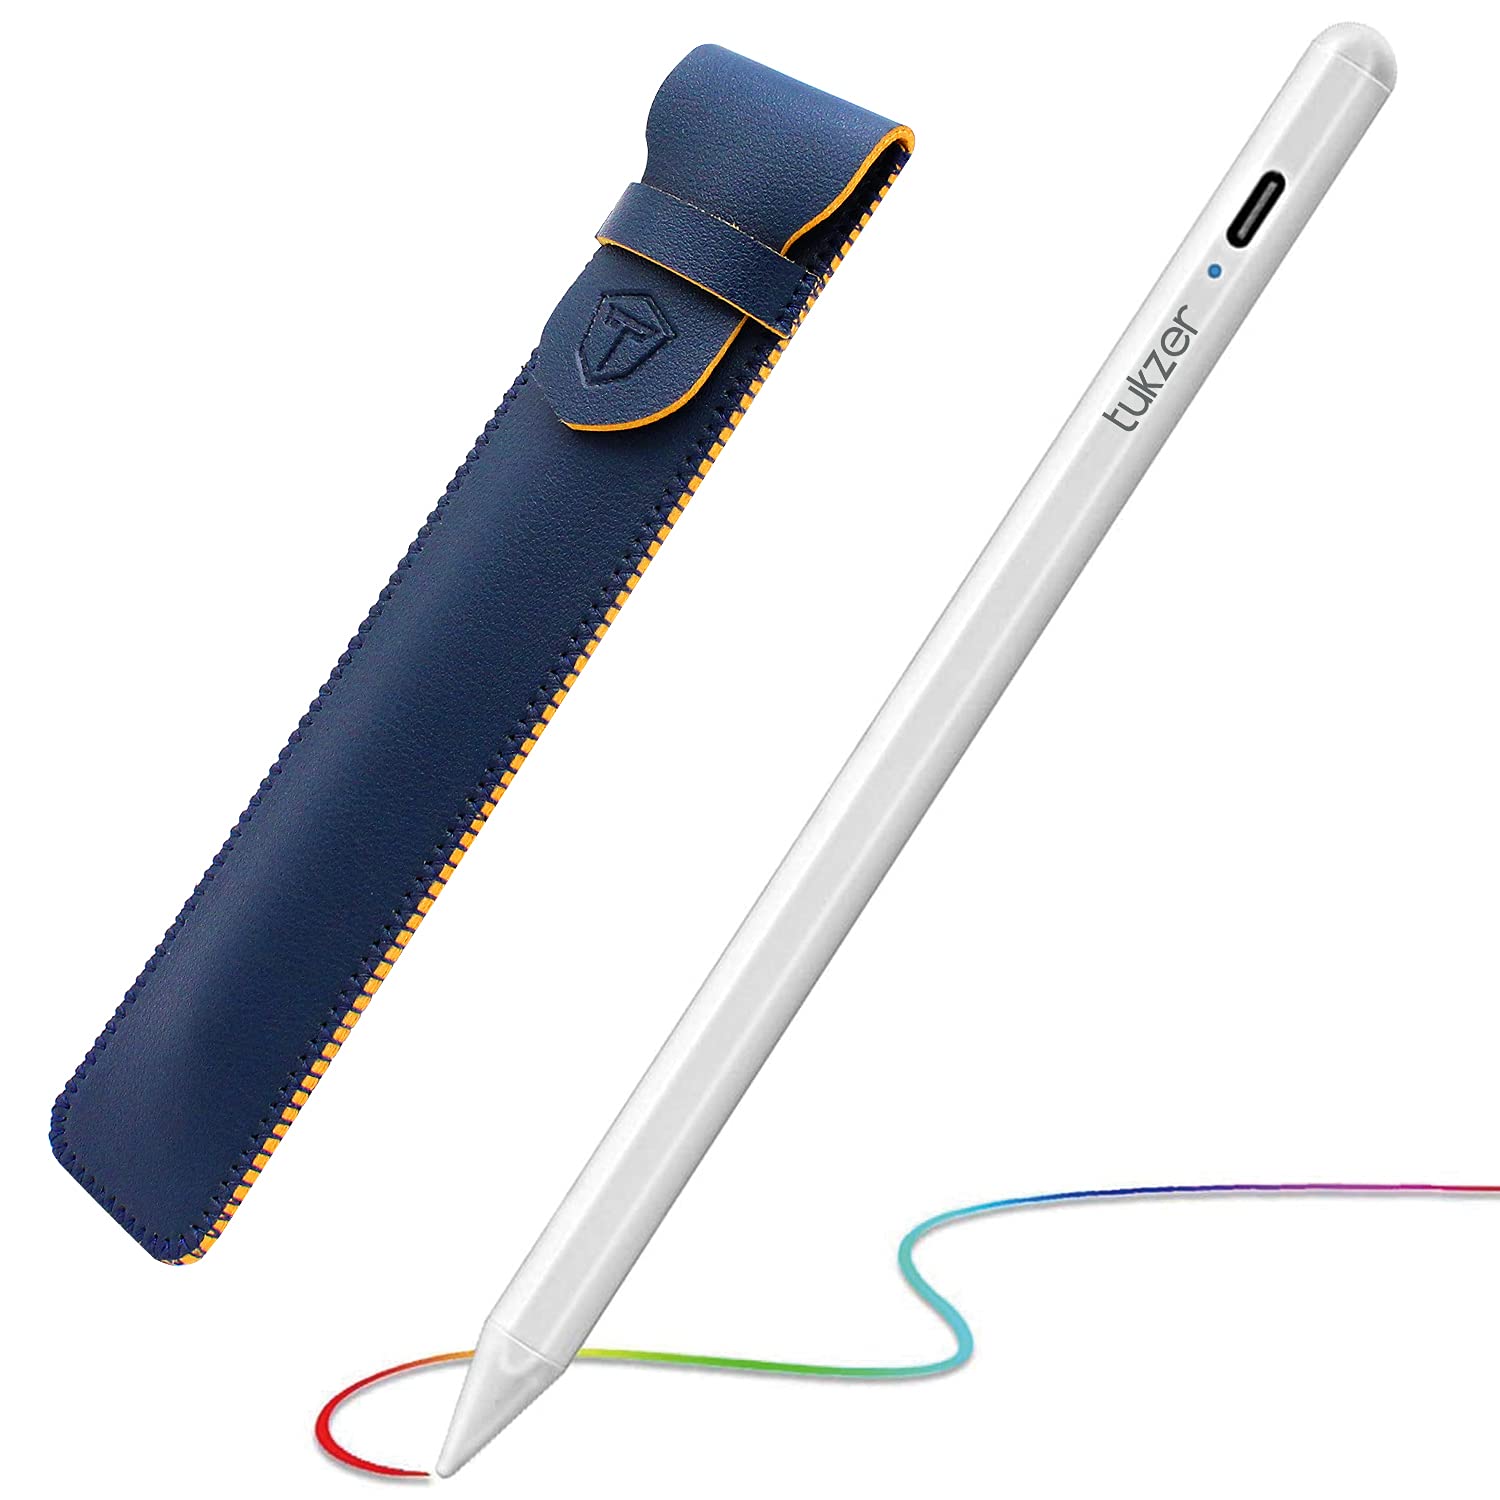 Tukzer Stylus Pen for Apple devices